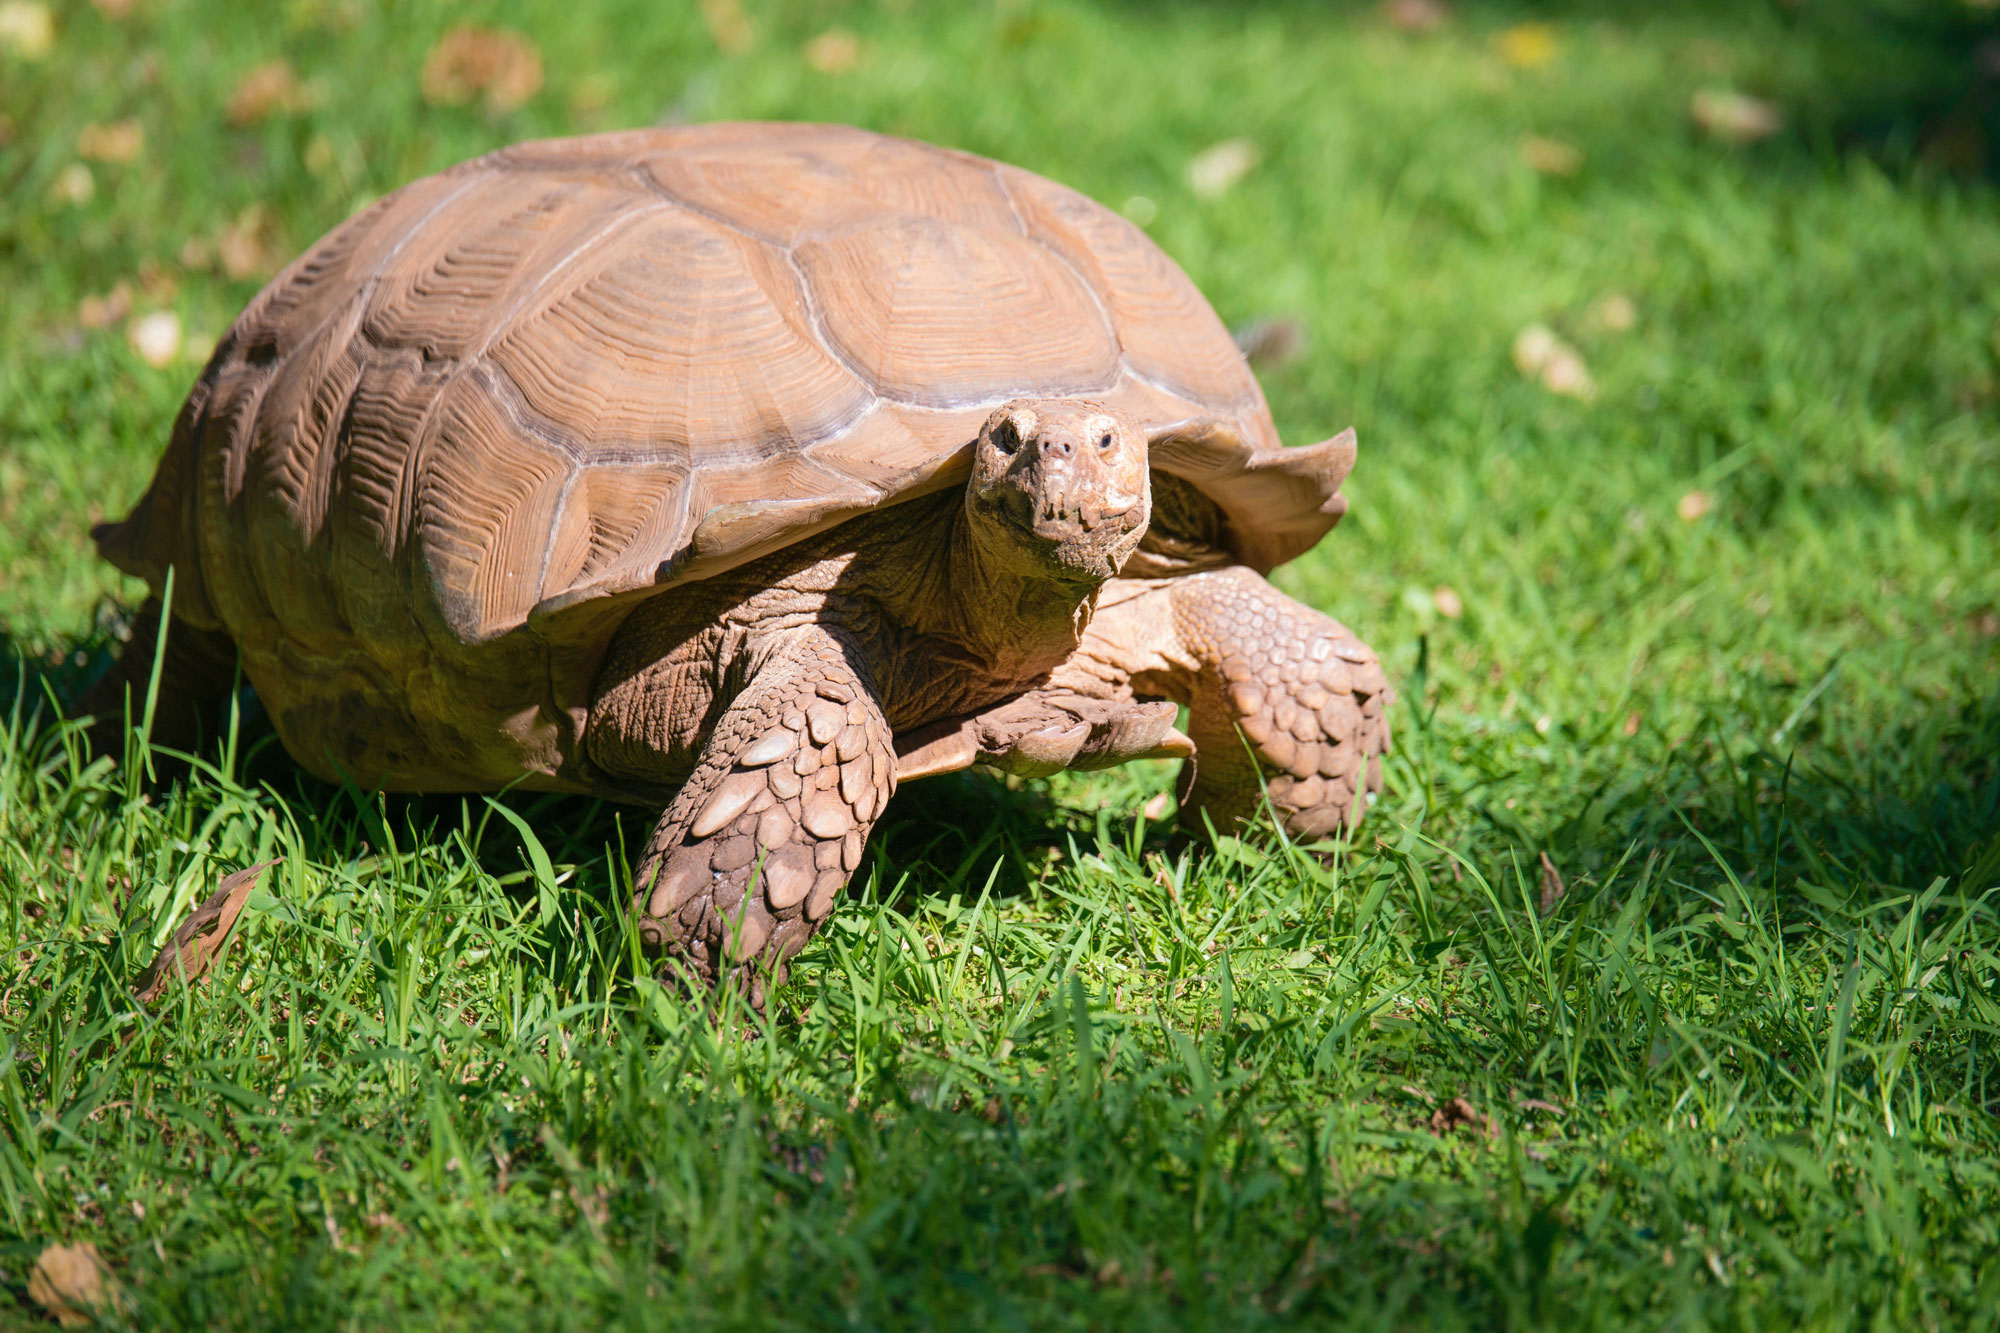 Tortoise on grass